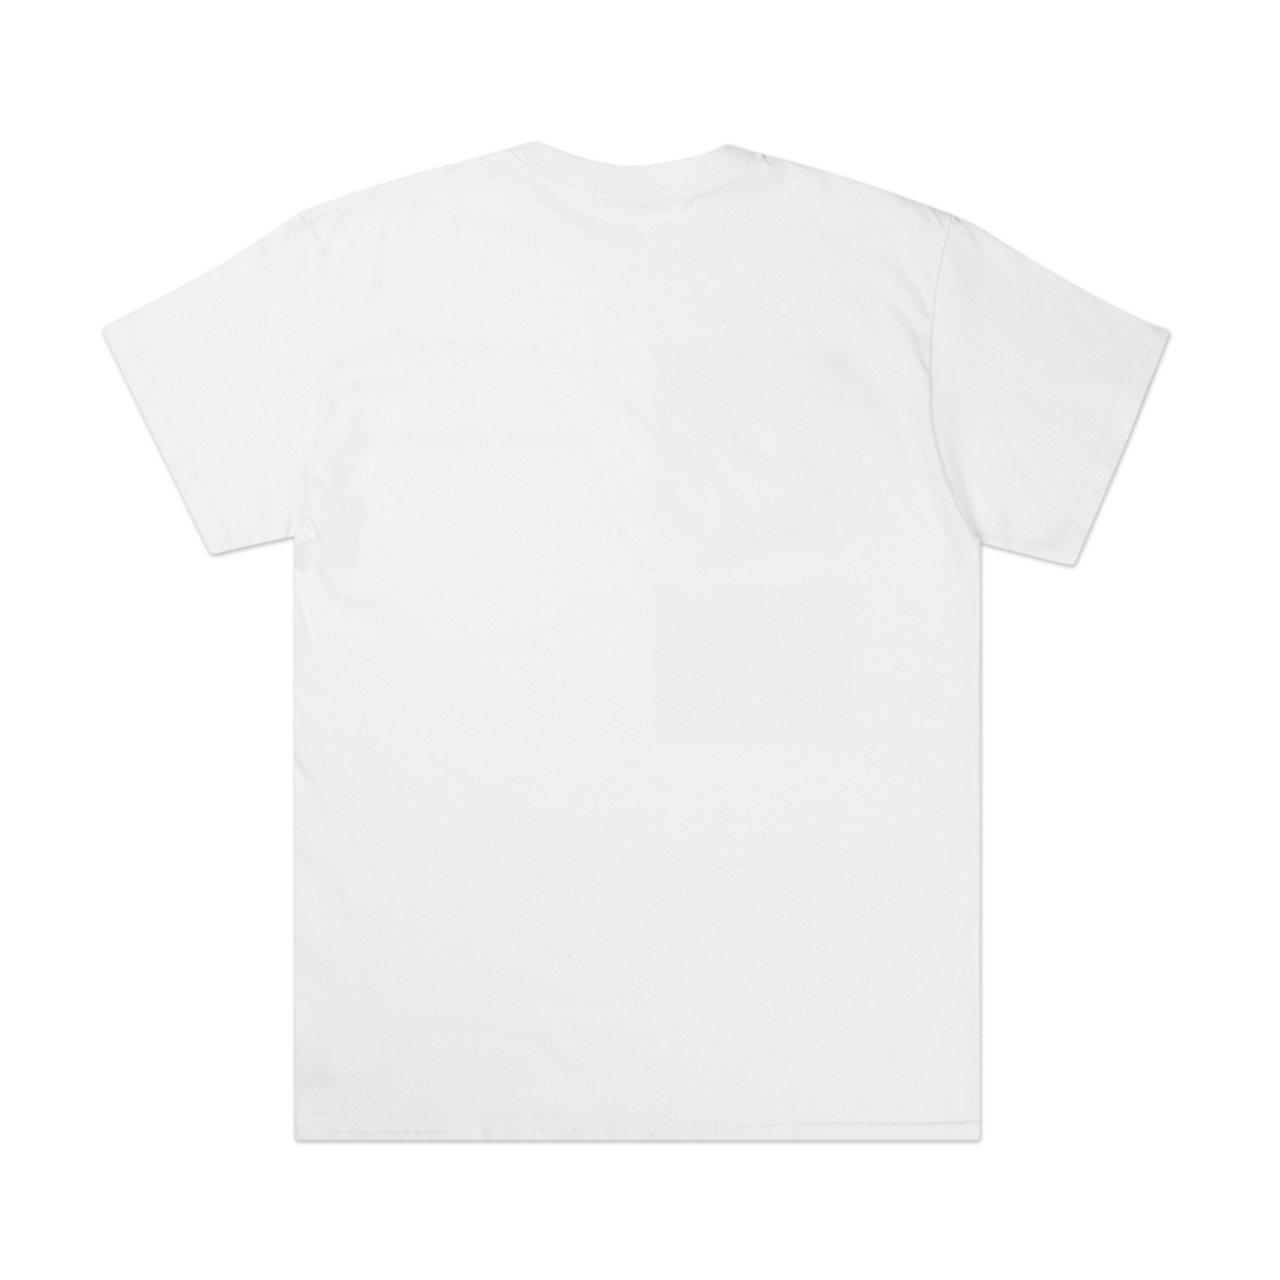 flagstuff x larry clark t-shirt (white) - 19aw-fsxlc-06-wht - a.plus - Image - 2